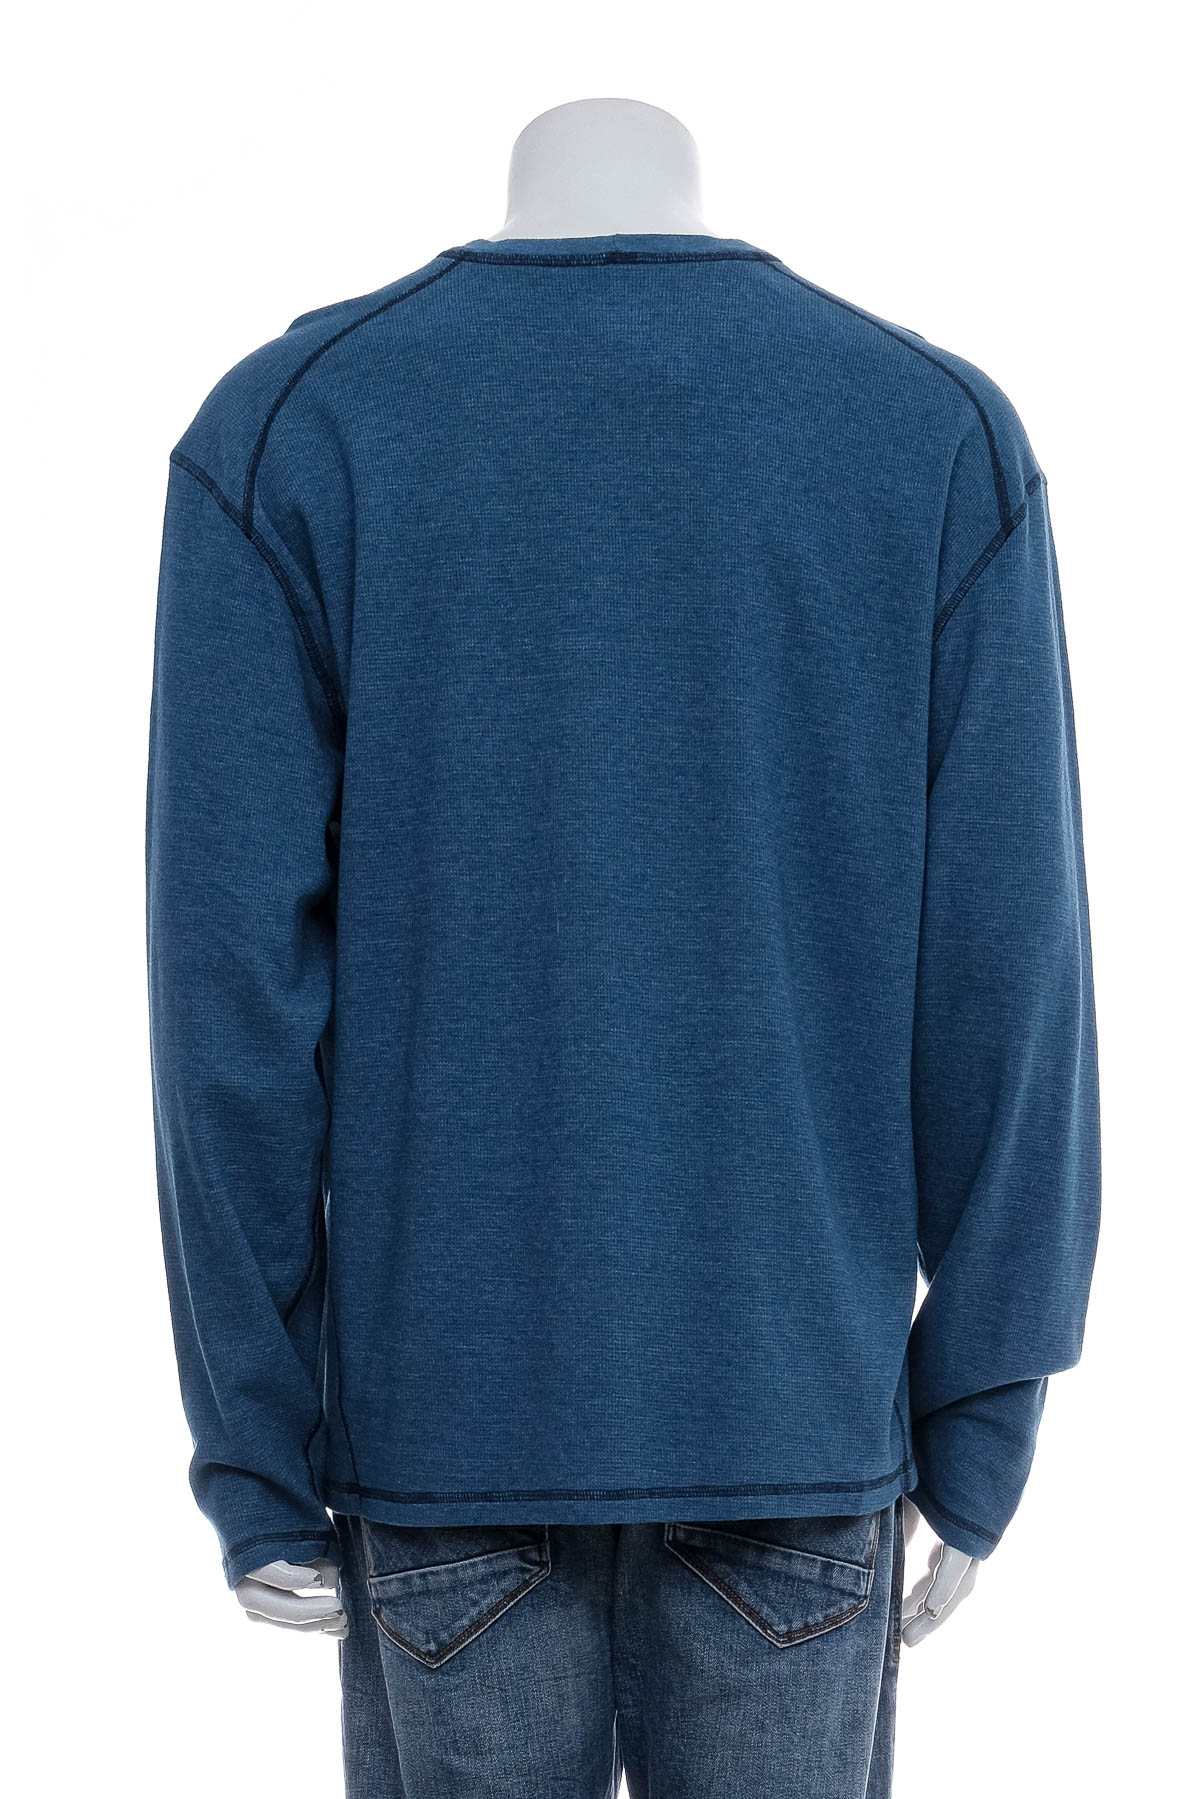 Men's sweater - Mountain Hardwear - 1